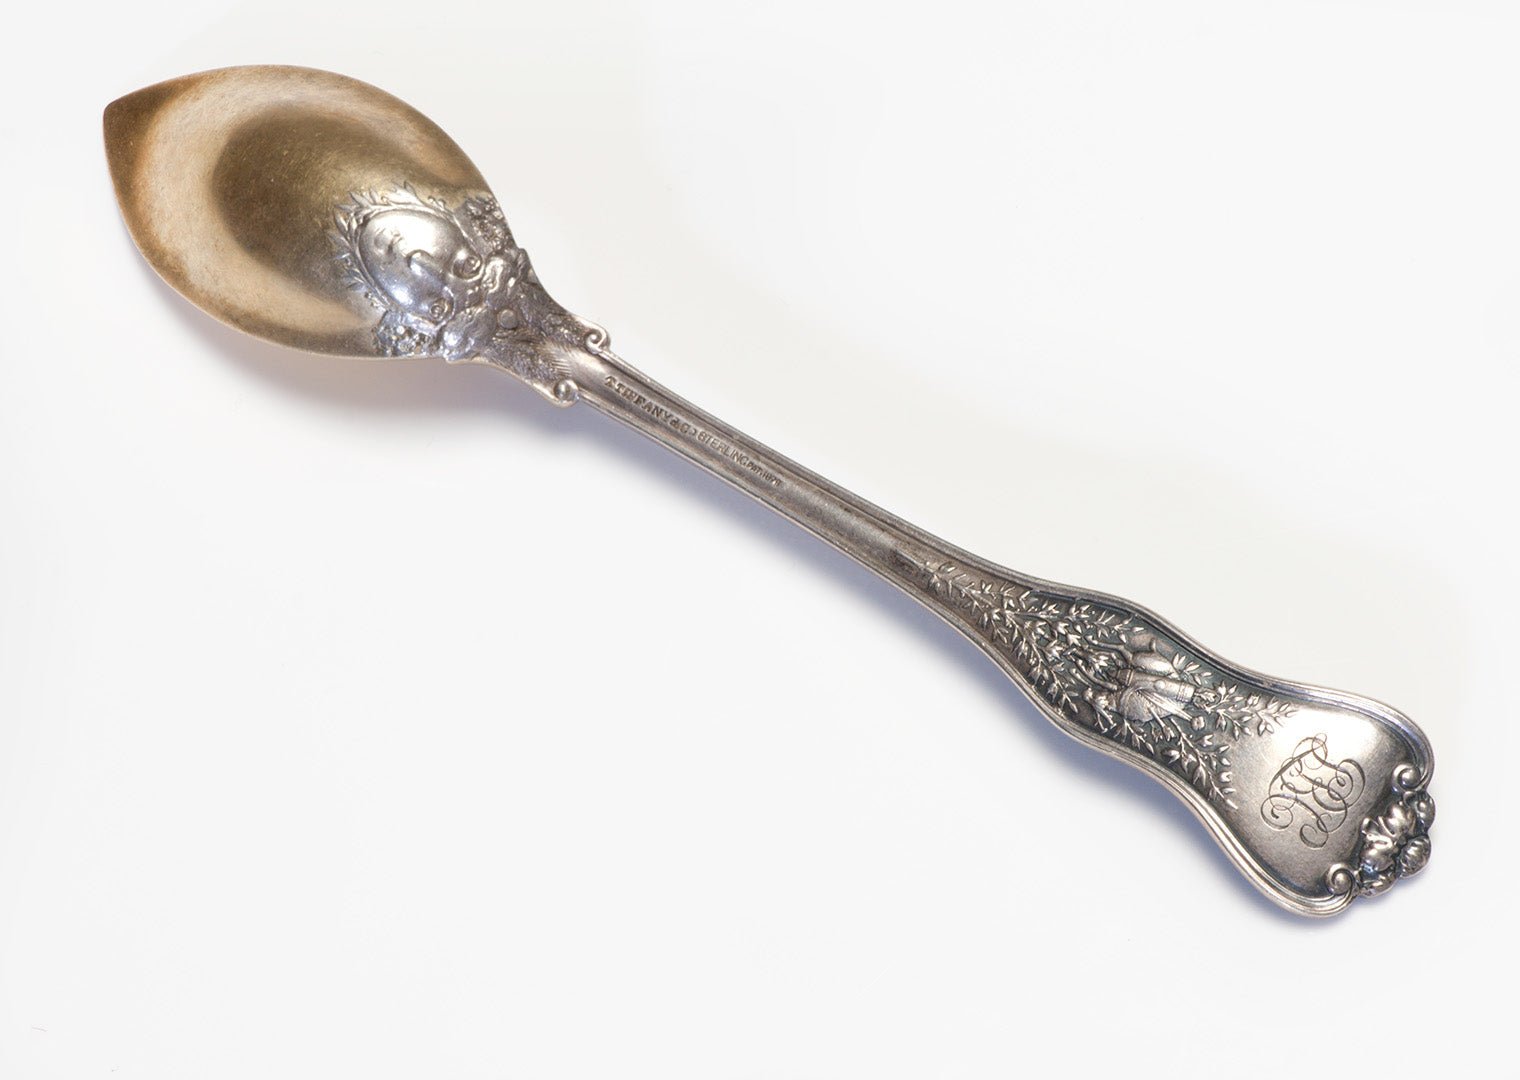 Antique Tiffany & Co. Silver Serving Spoon